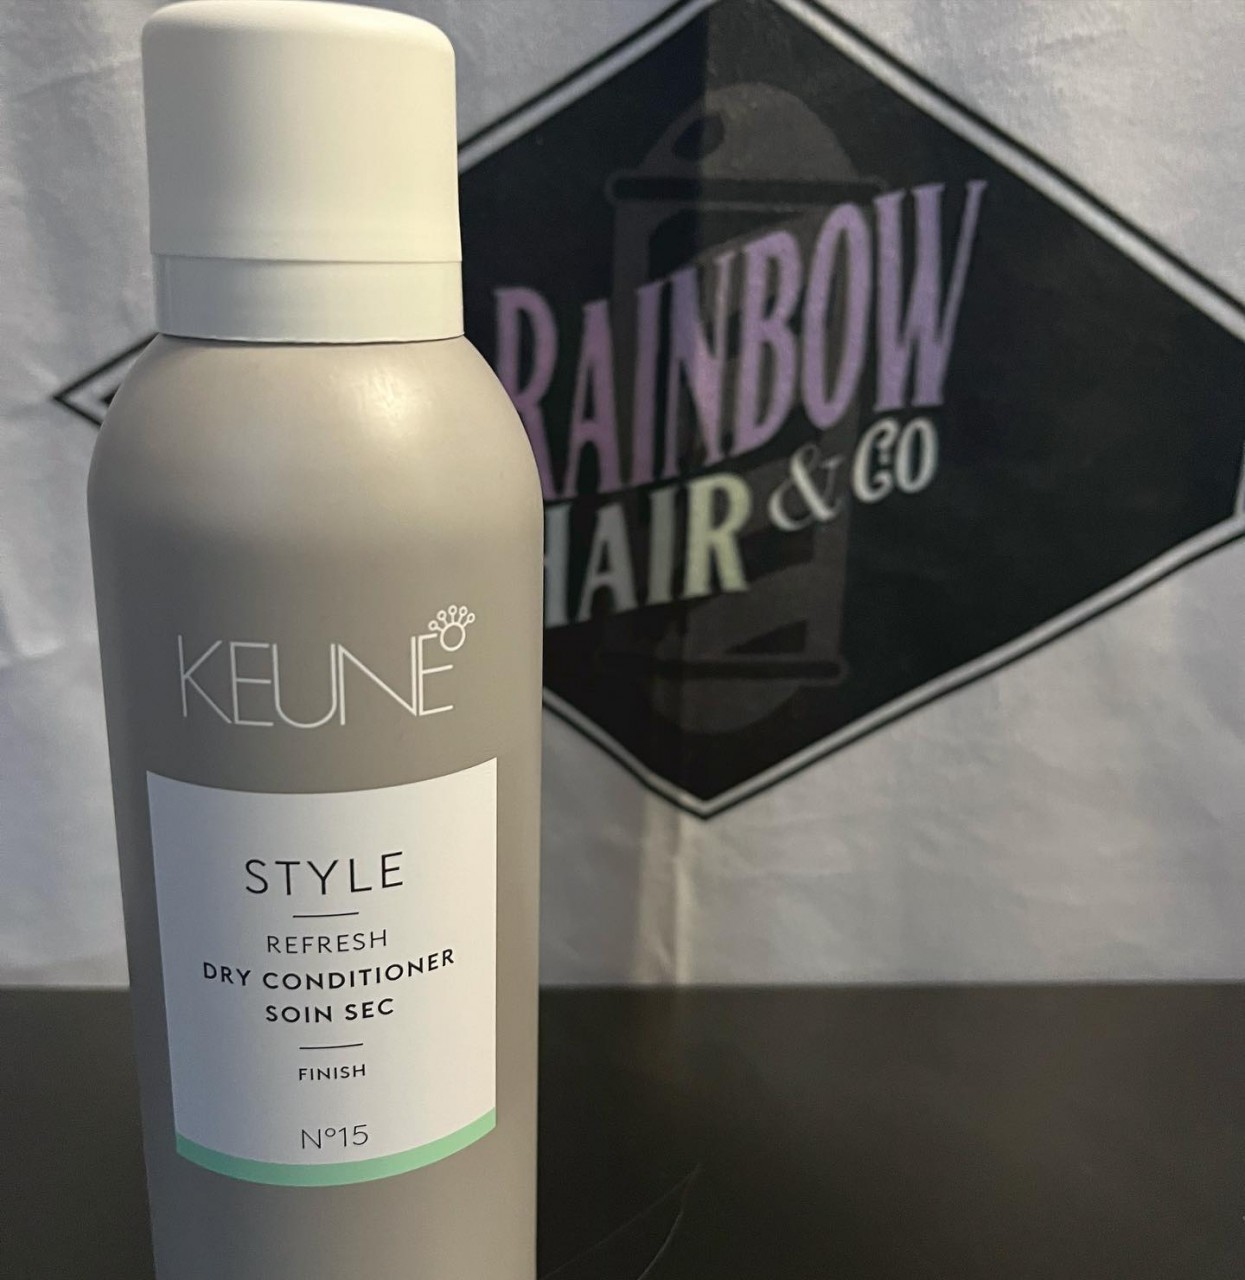 RAINBOW HAIR AND CO - Après-shampooing sec/Soin sec